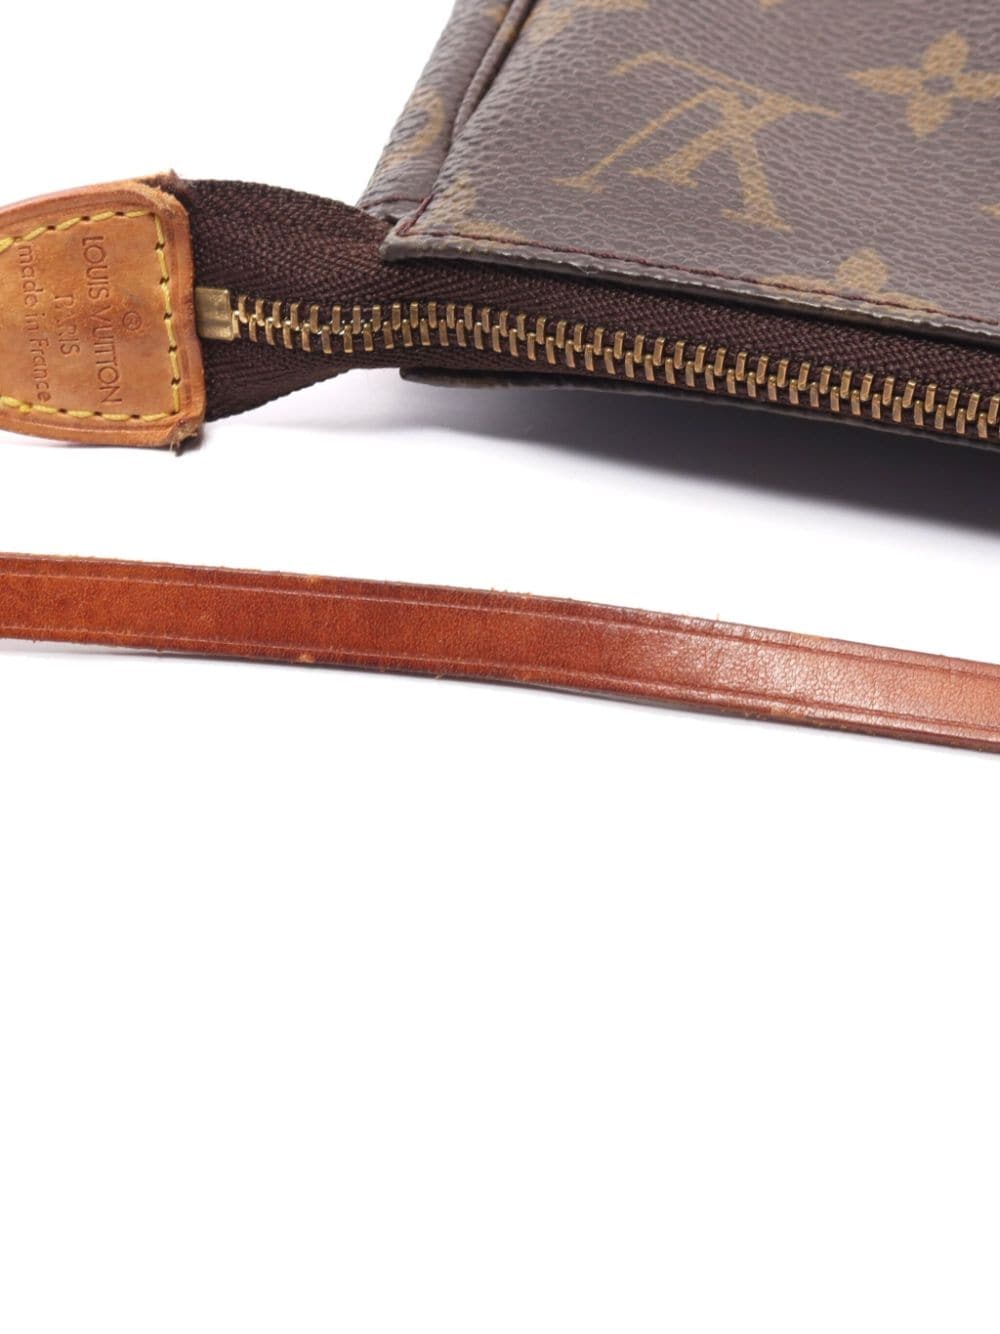 Pre-owned Louis Vuitton 2000 Pochette Accessoires Clutch Bag In Brown